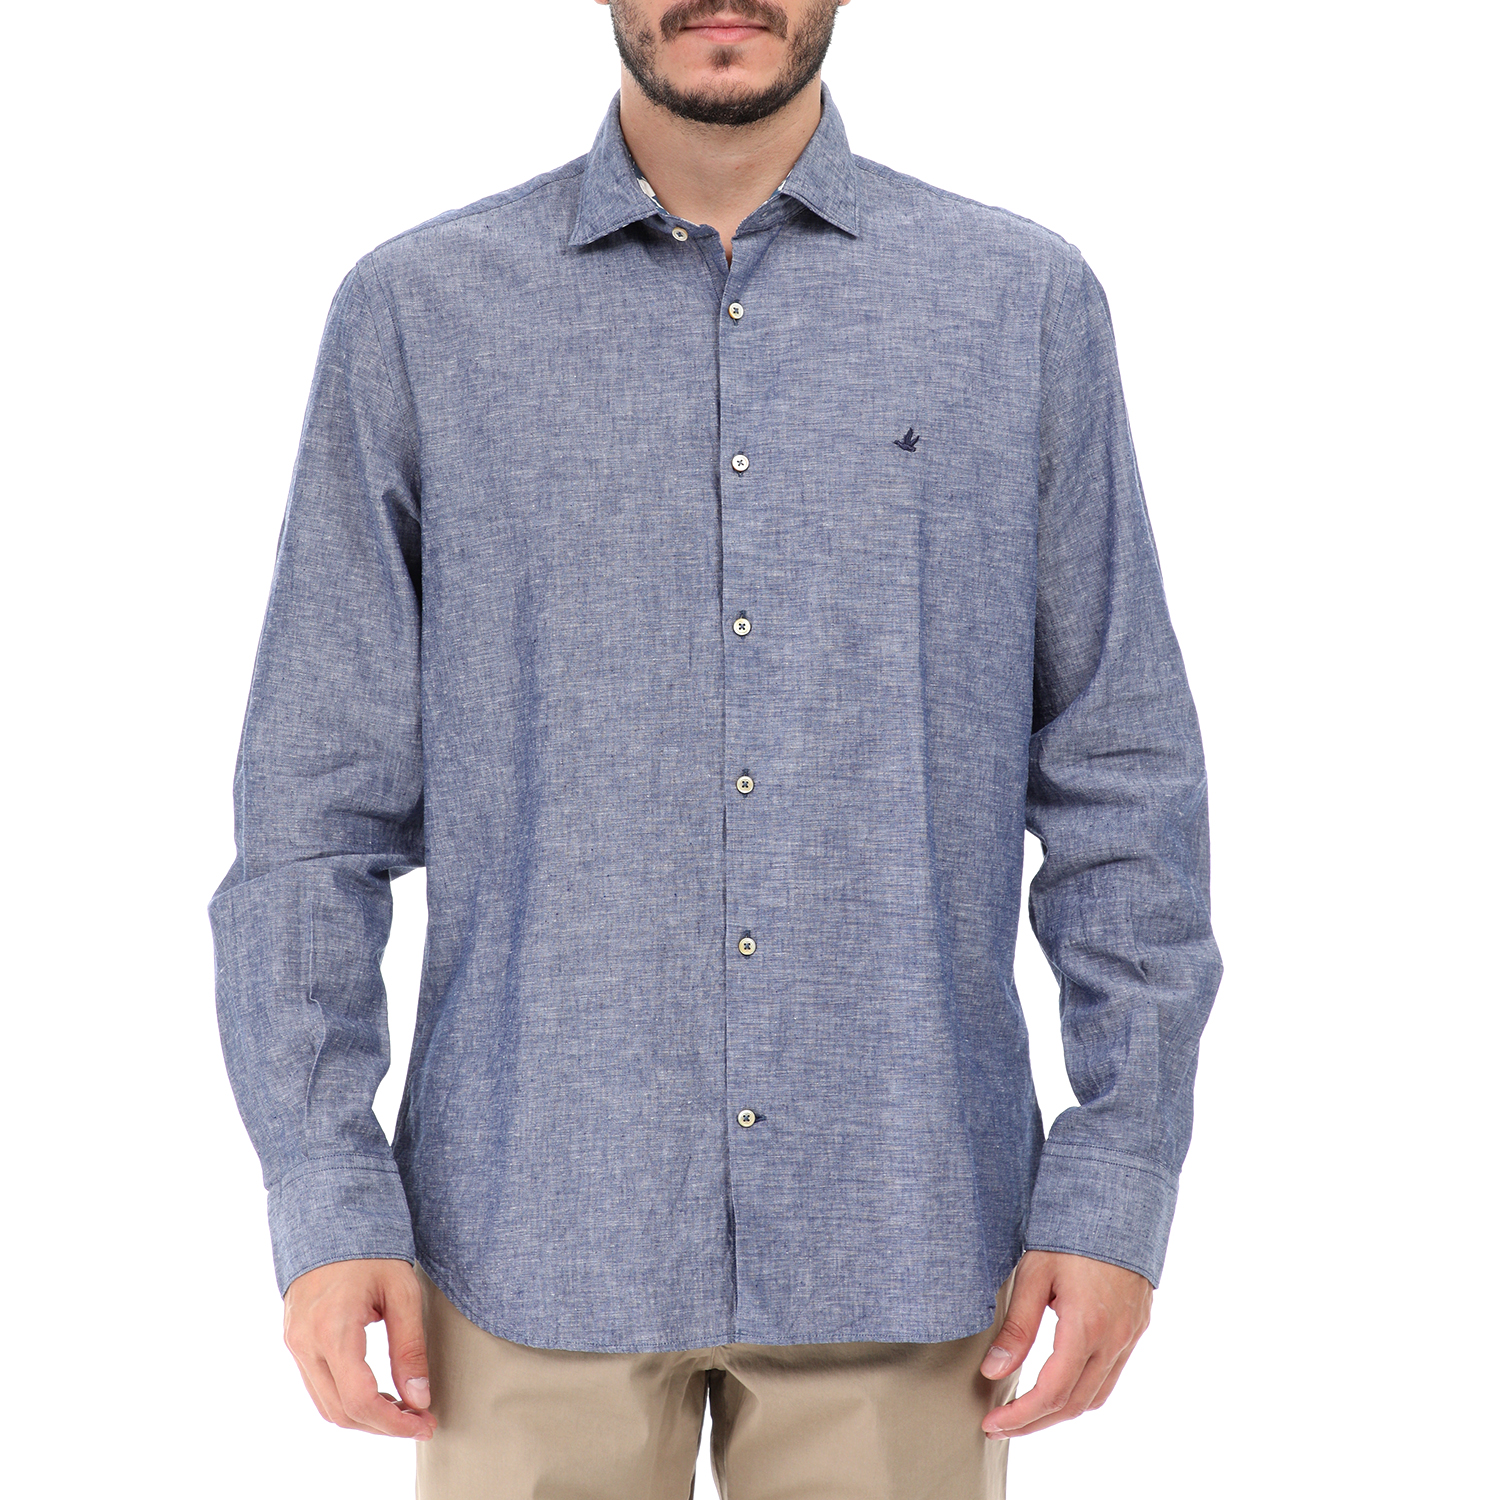 BROOKSFIELD - Ανδρικό πουκάμισο BROOKSFIELD μπλε Ανδρικά/Ρούχα/Πουκάμισα/Μακρυμάνικα